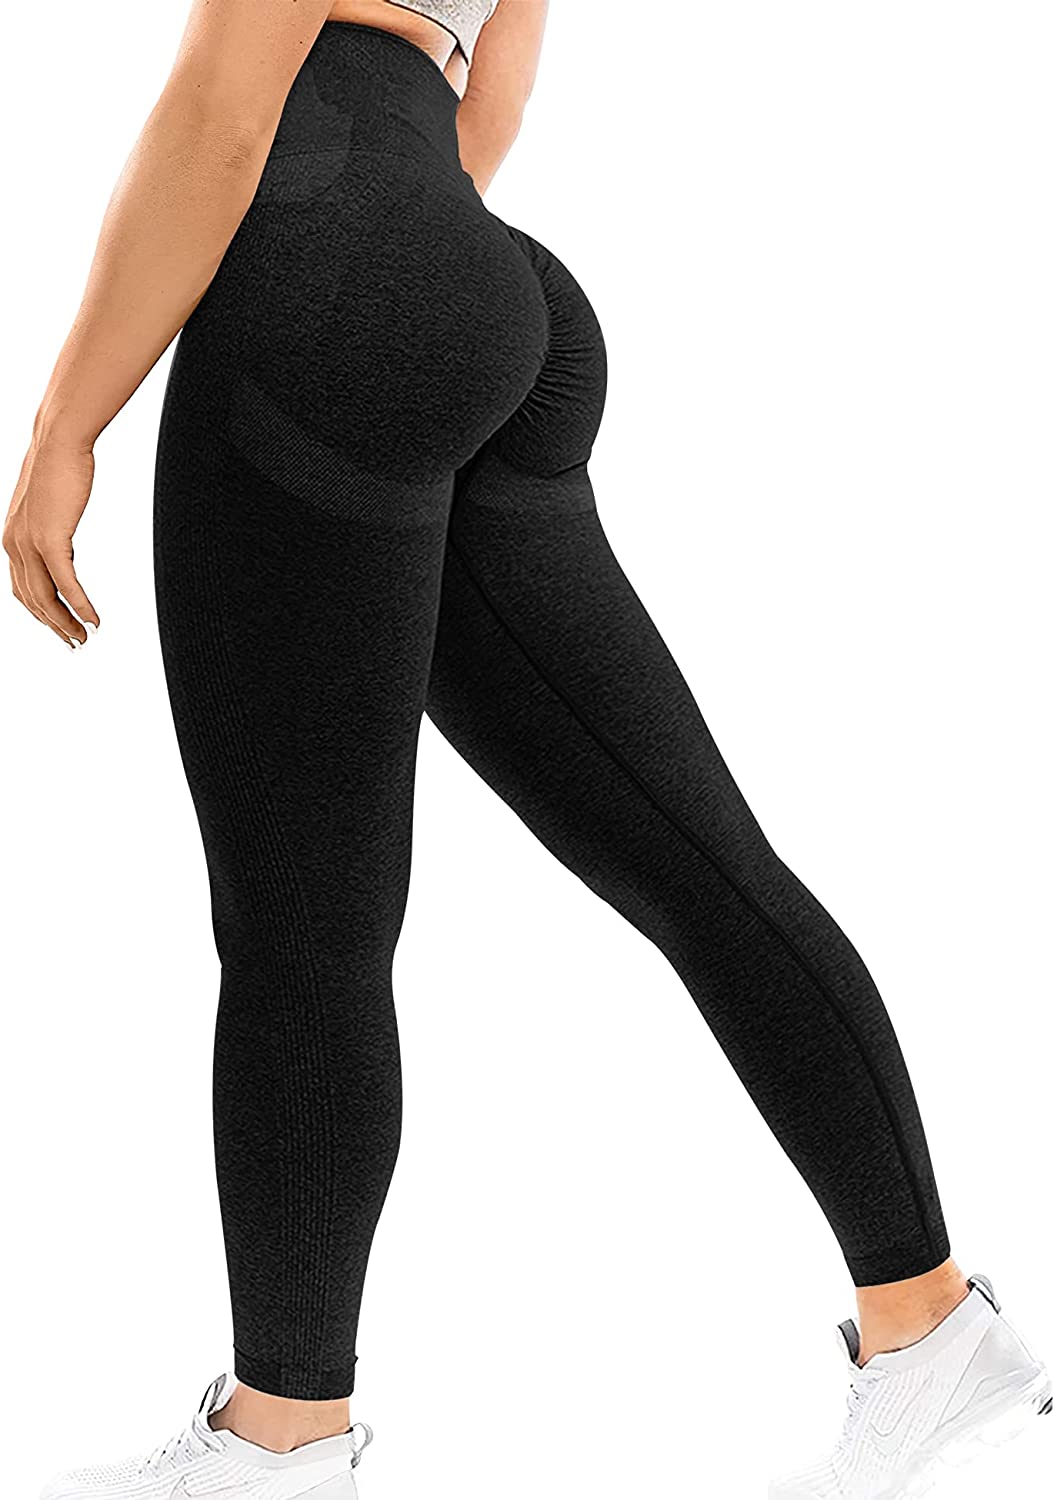 Sports & Outdoors, Bubble butt leggings women WholeSale - Price